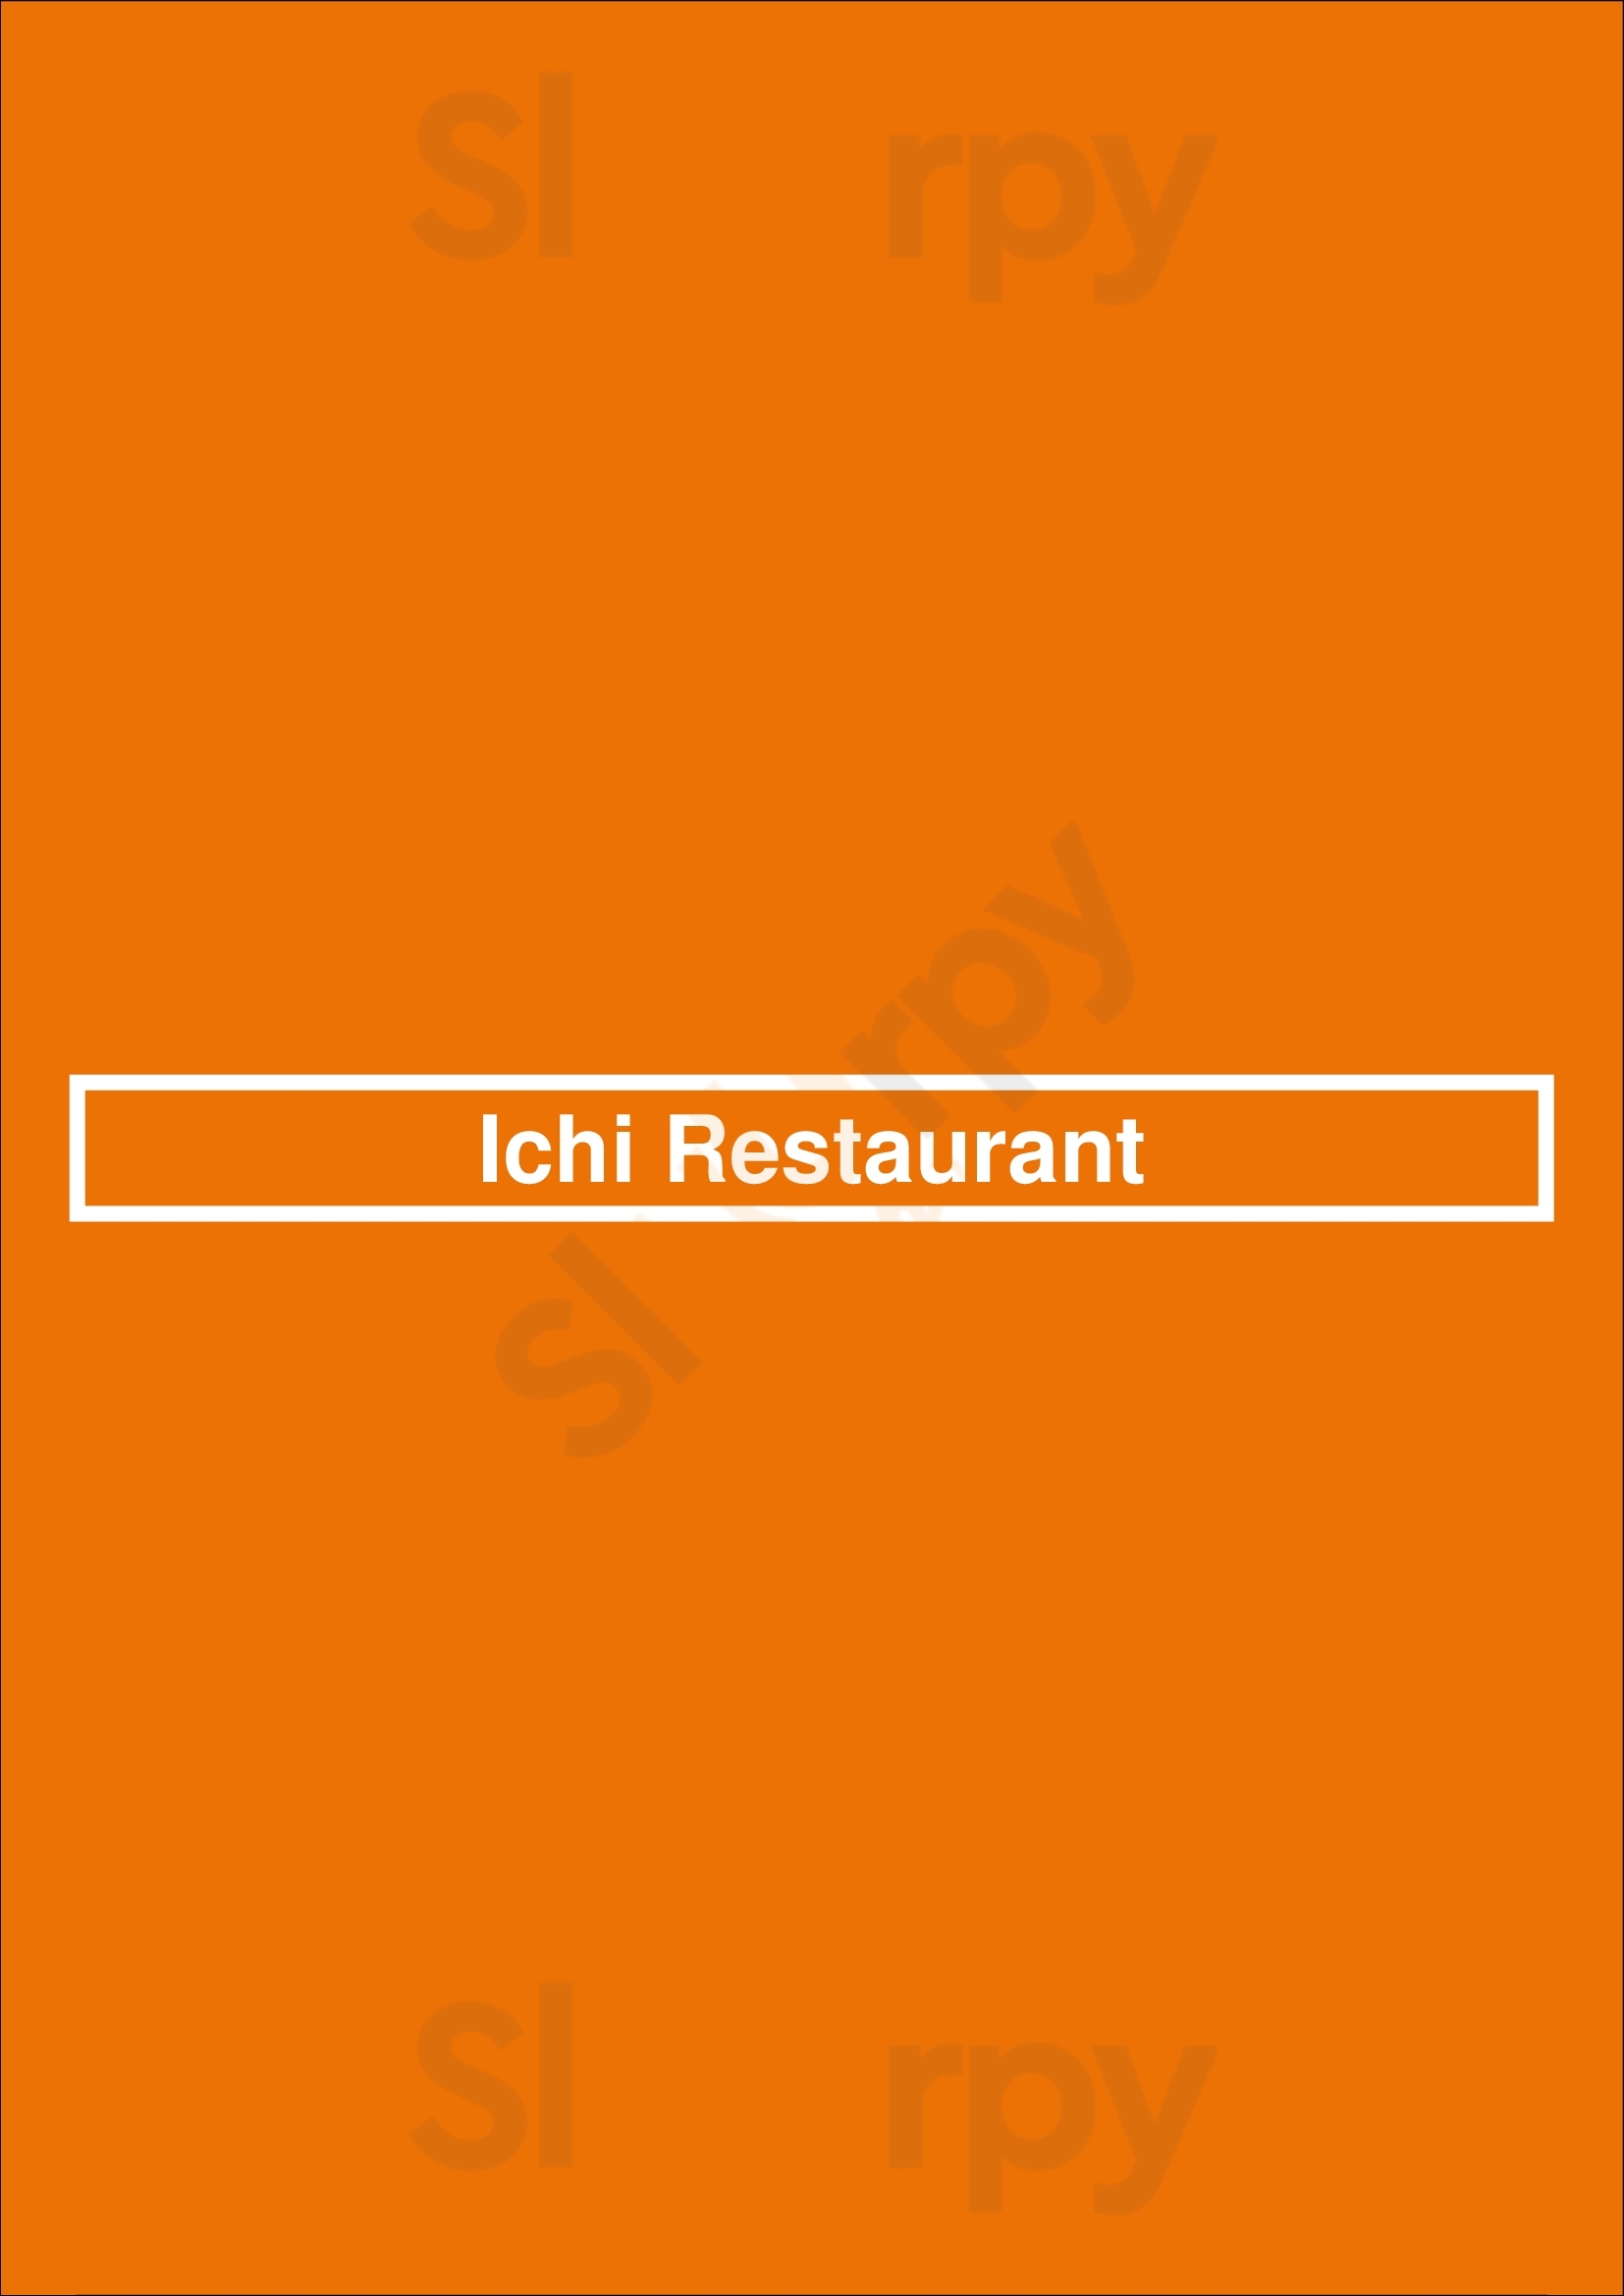 Ichi Restaurant Kaatsheuvel Menu - 1